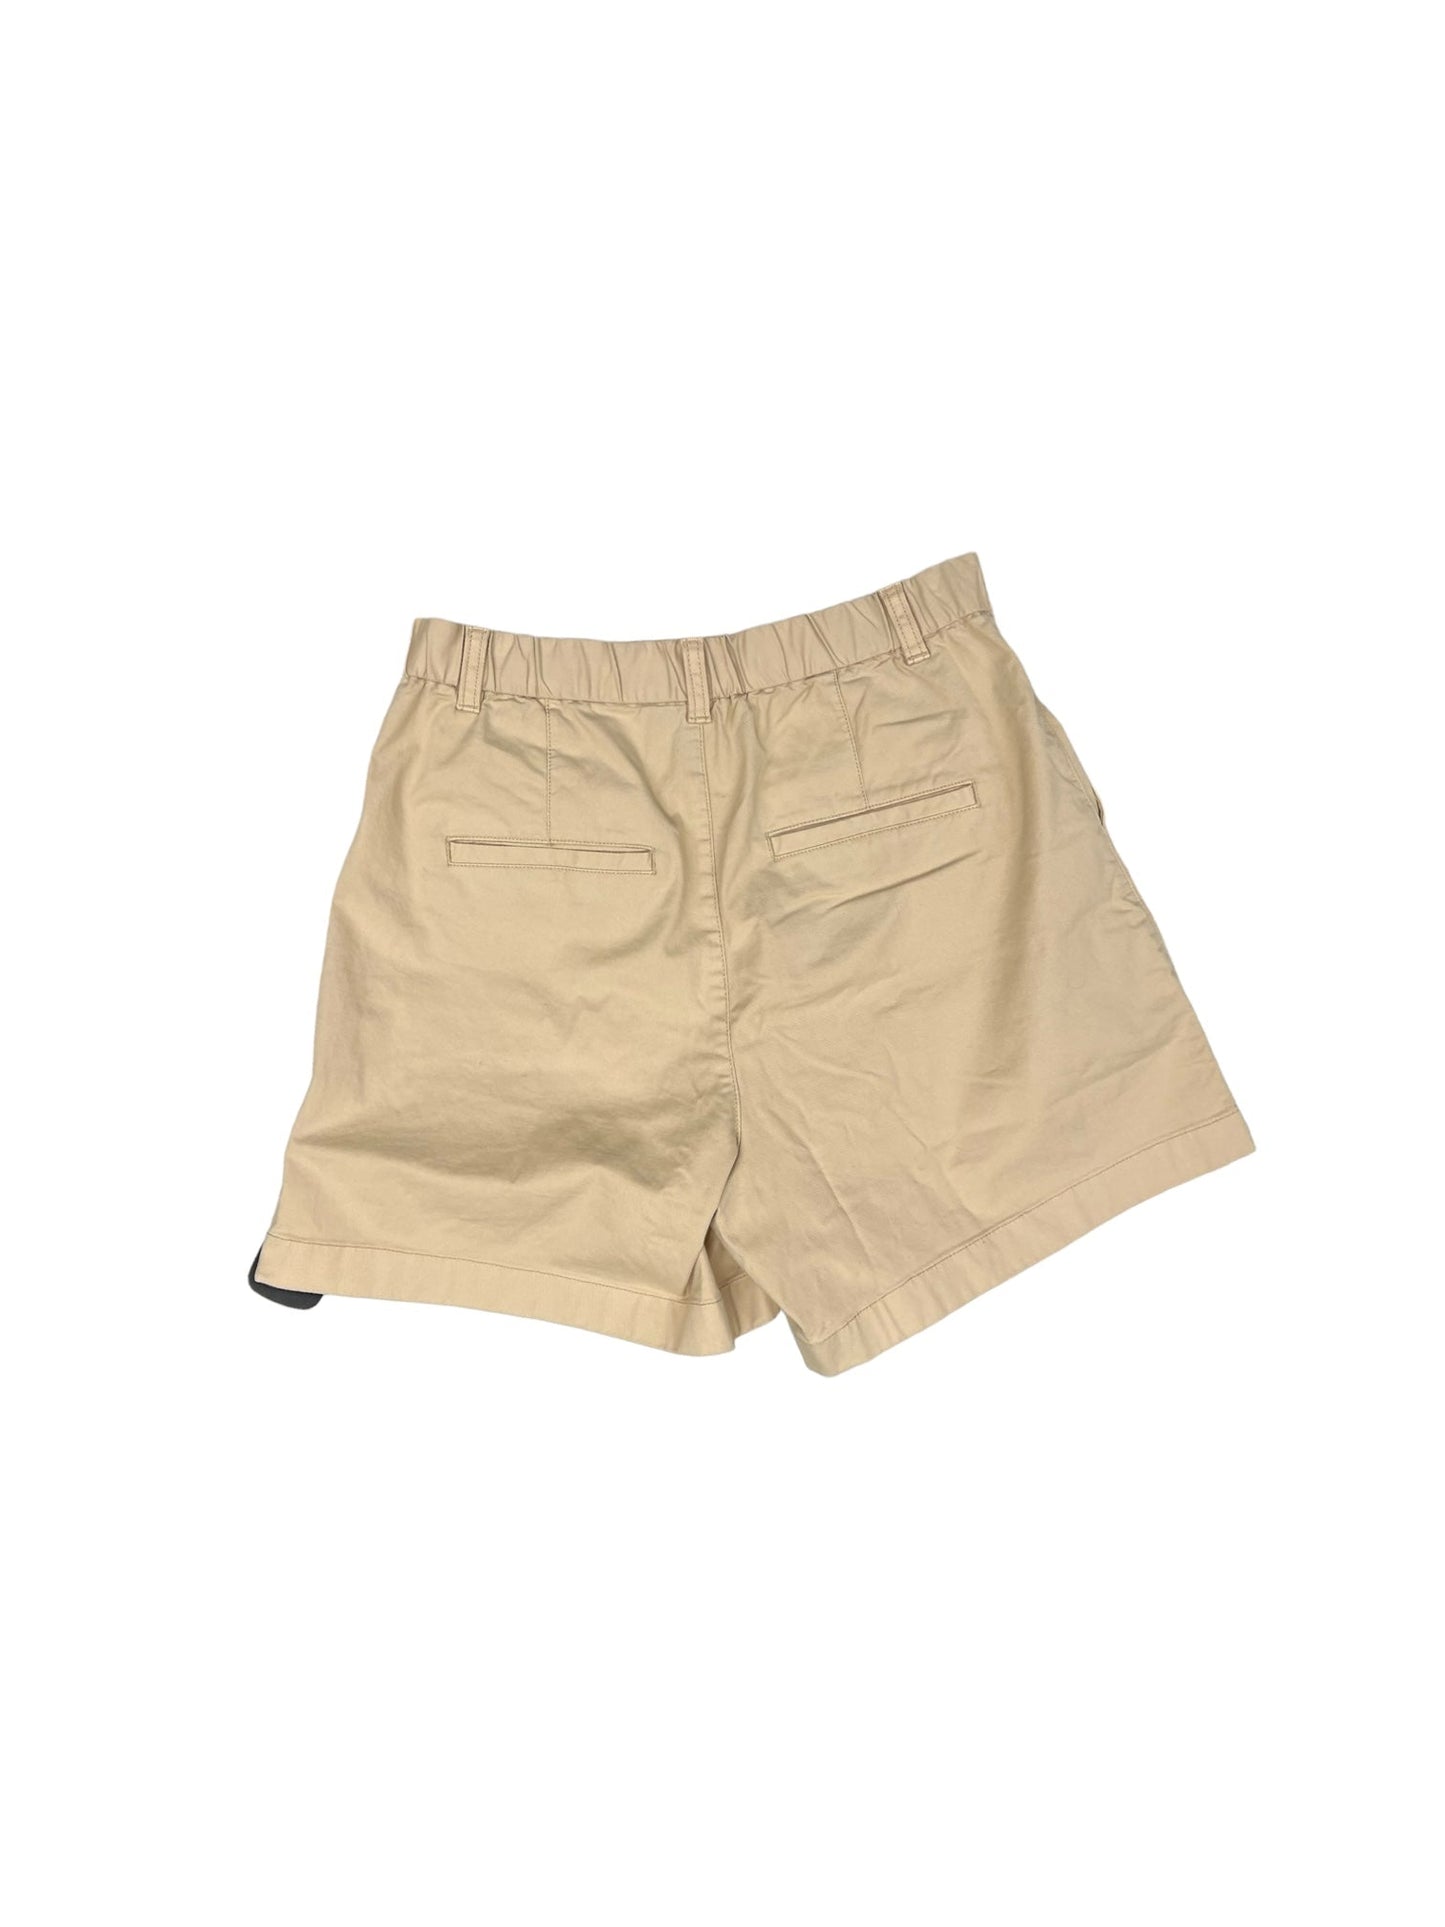 Tan Shorts Gap, Size 6